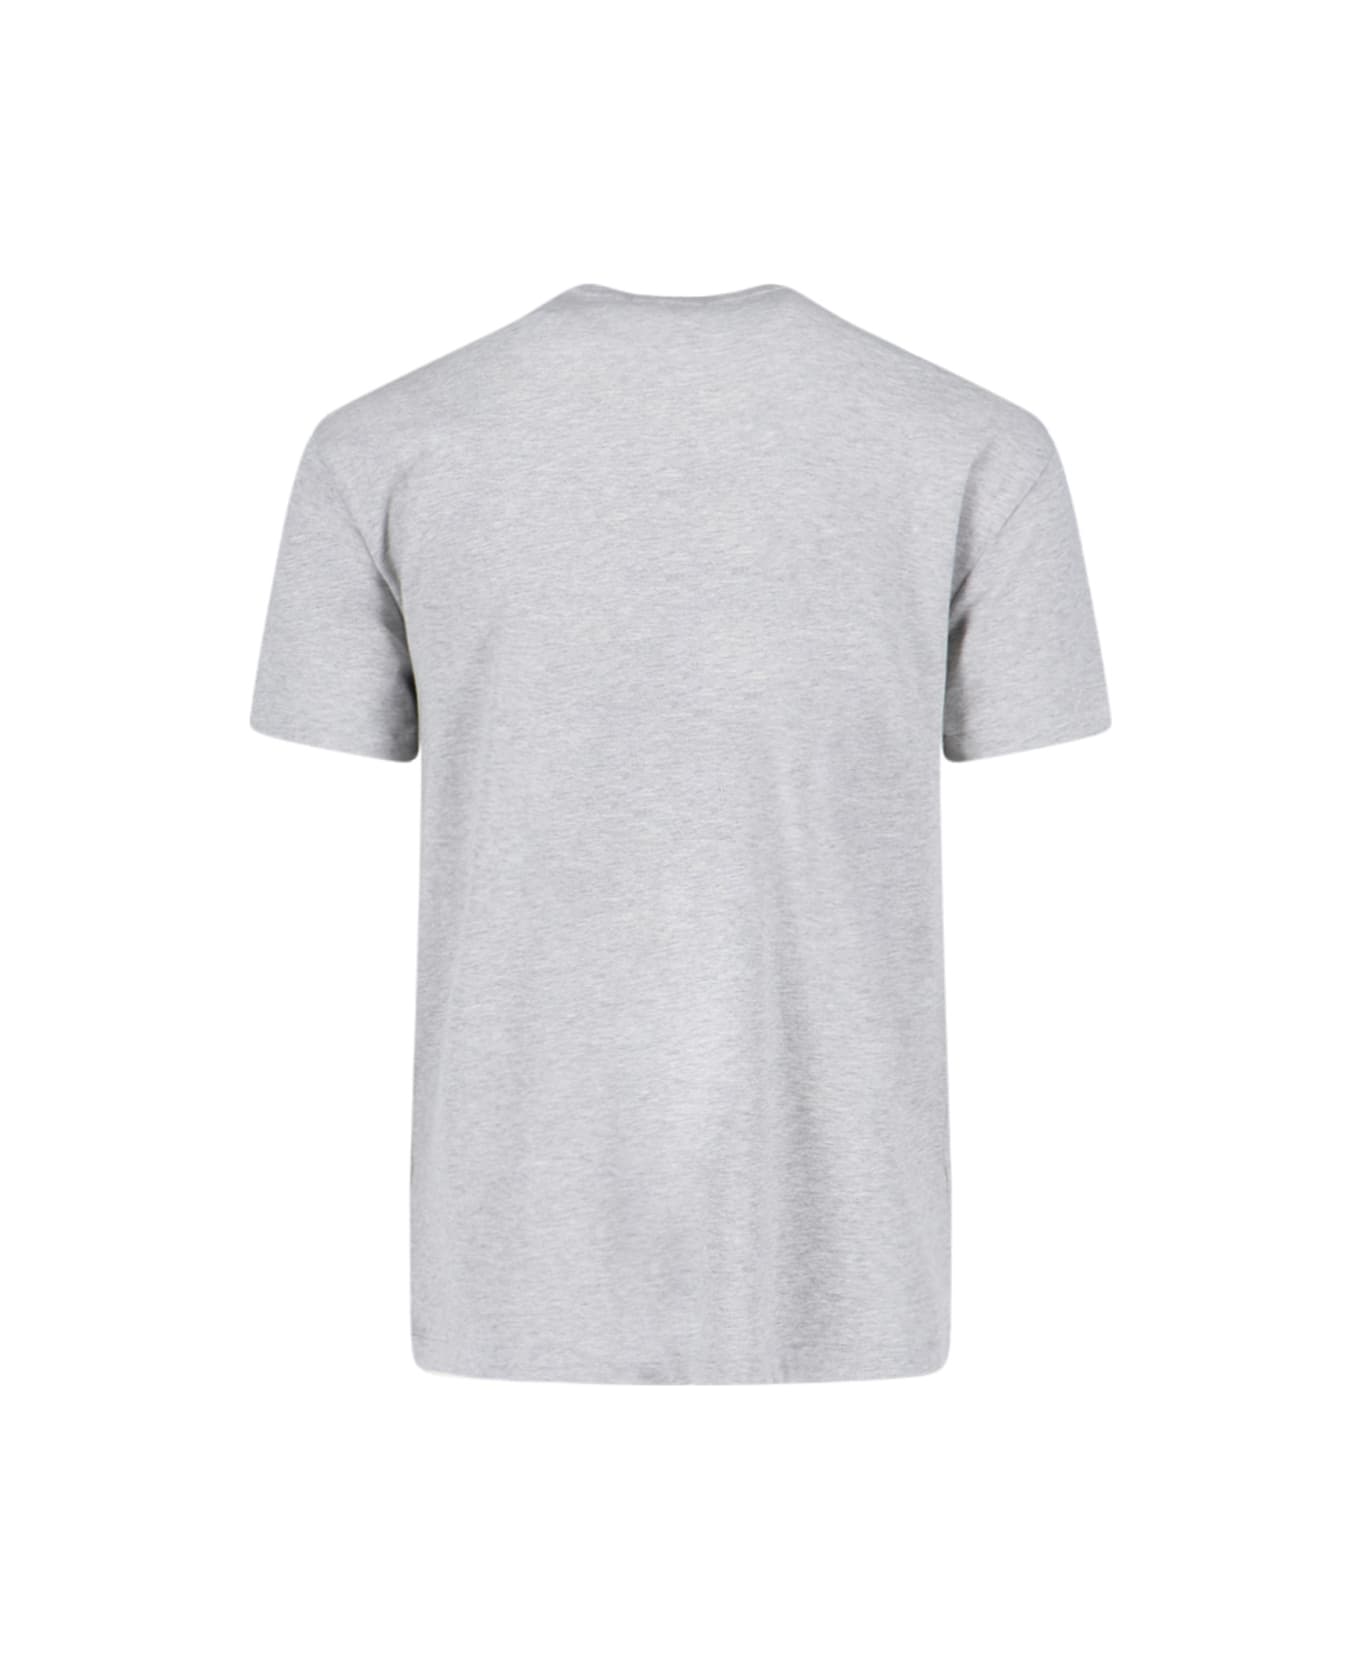 Polo Ralph Lauren 'polo Bear' T-shirt - GREY シャツ